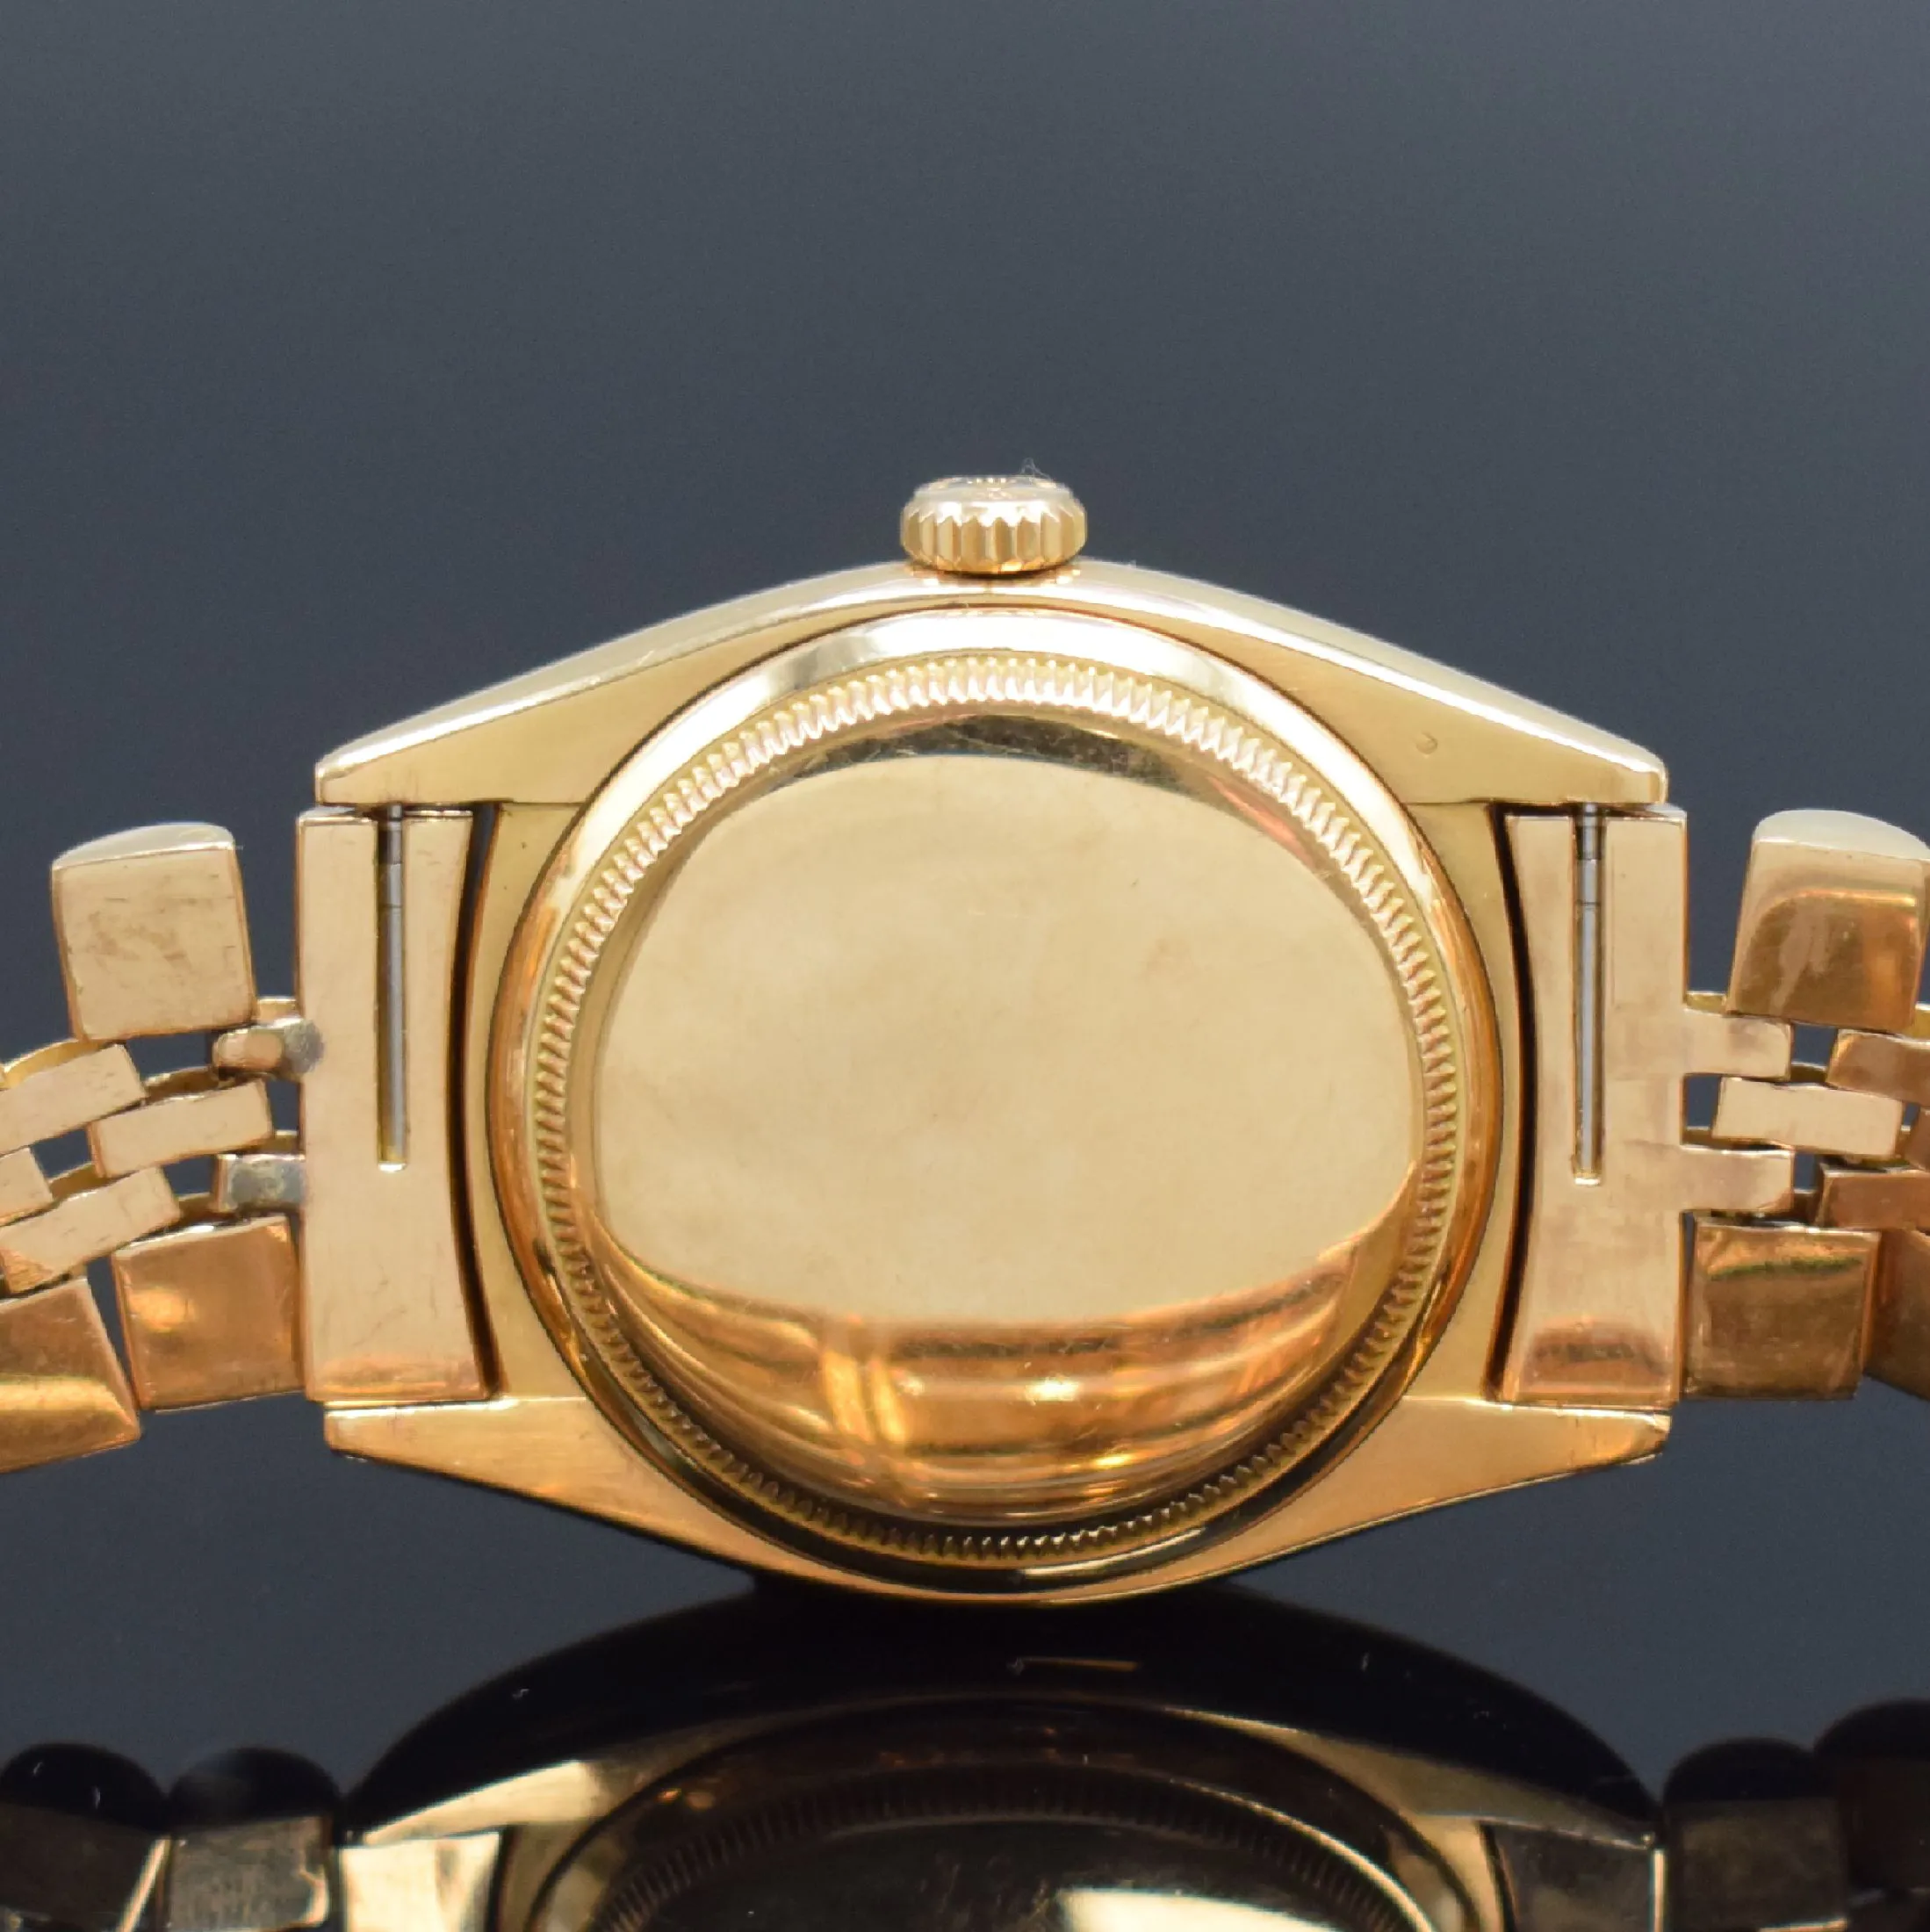 Rolex Datejust 36 6105 36mm Rose gold Silver 5